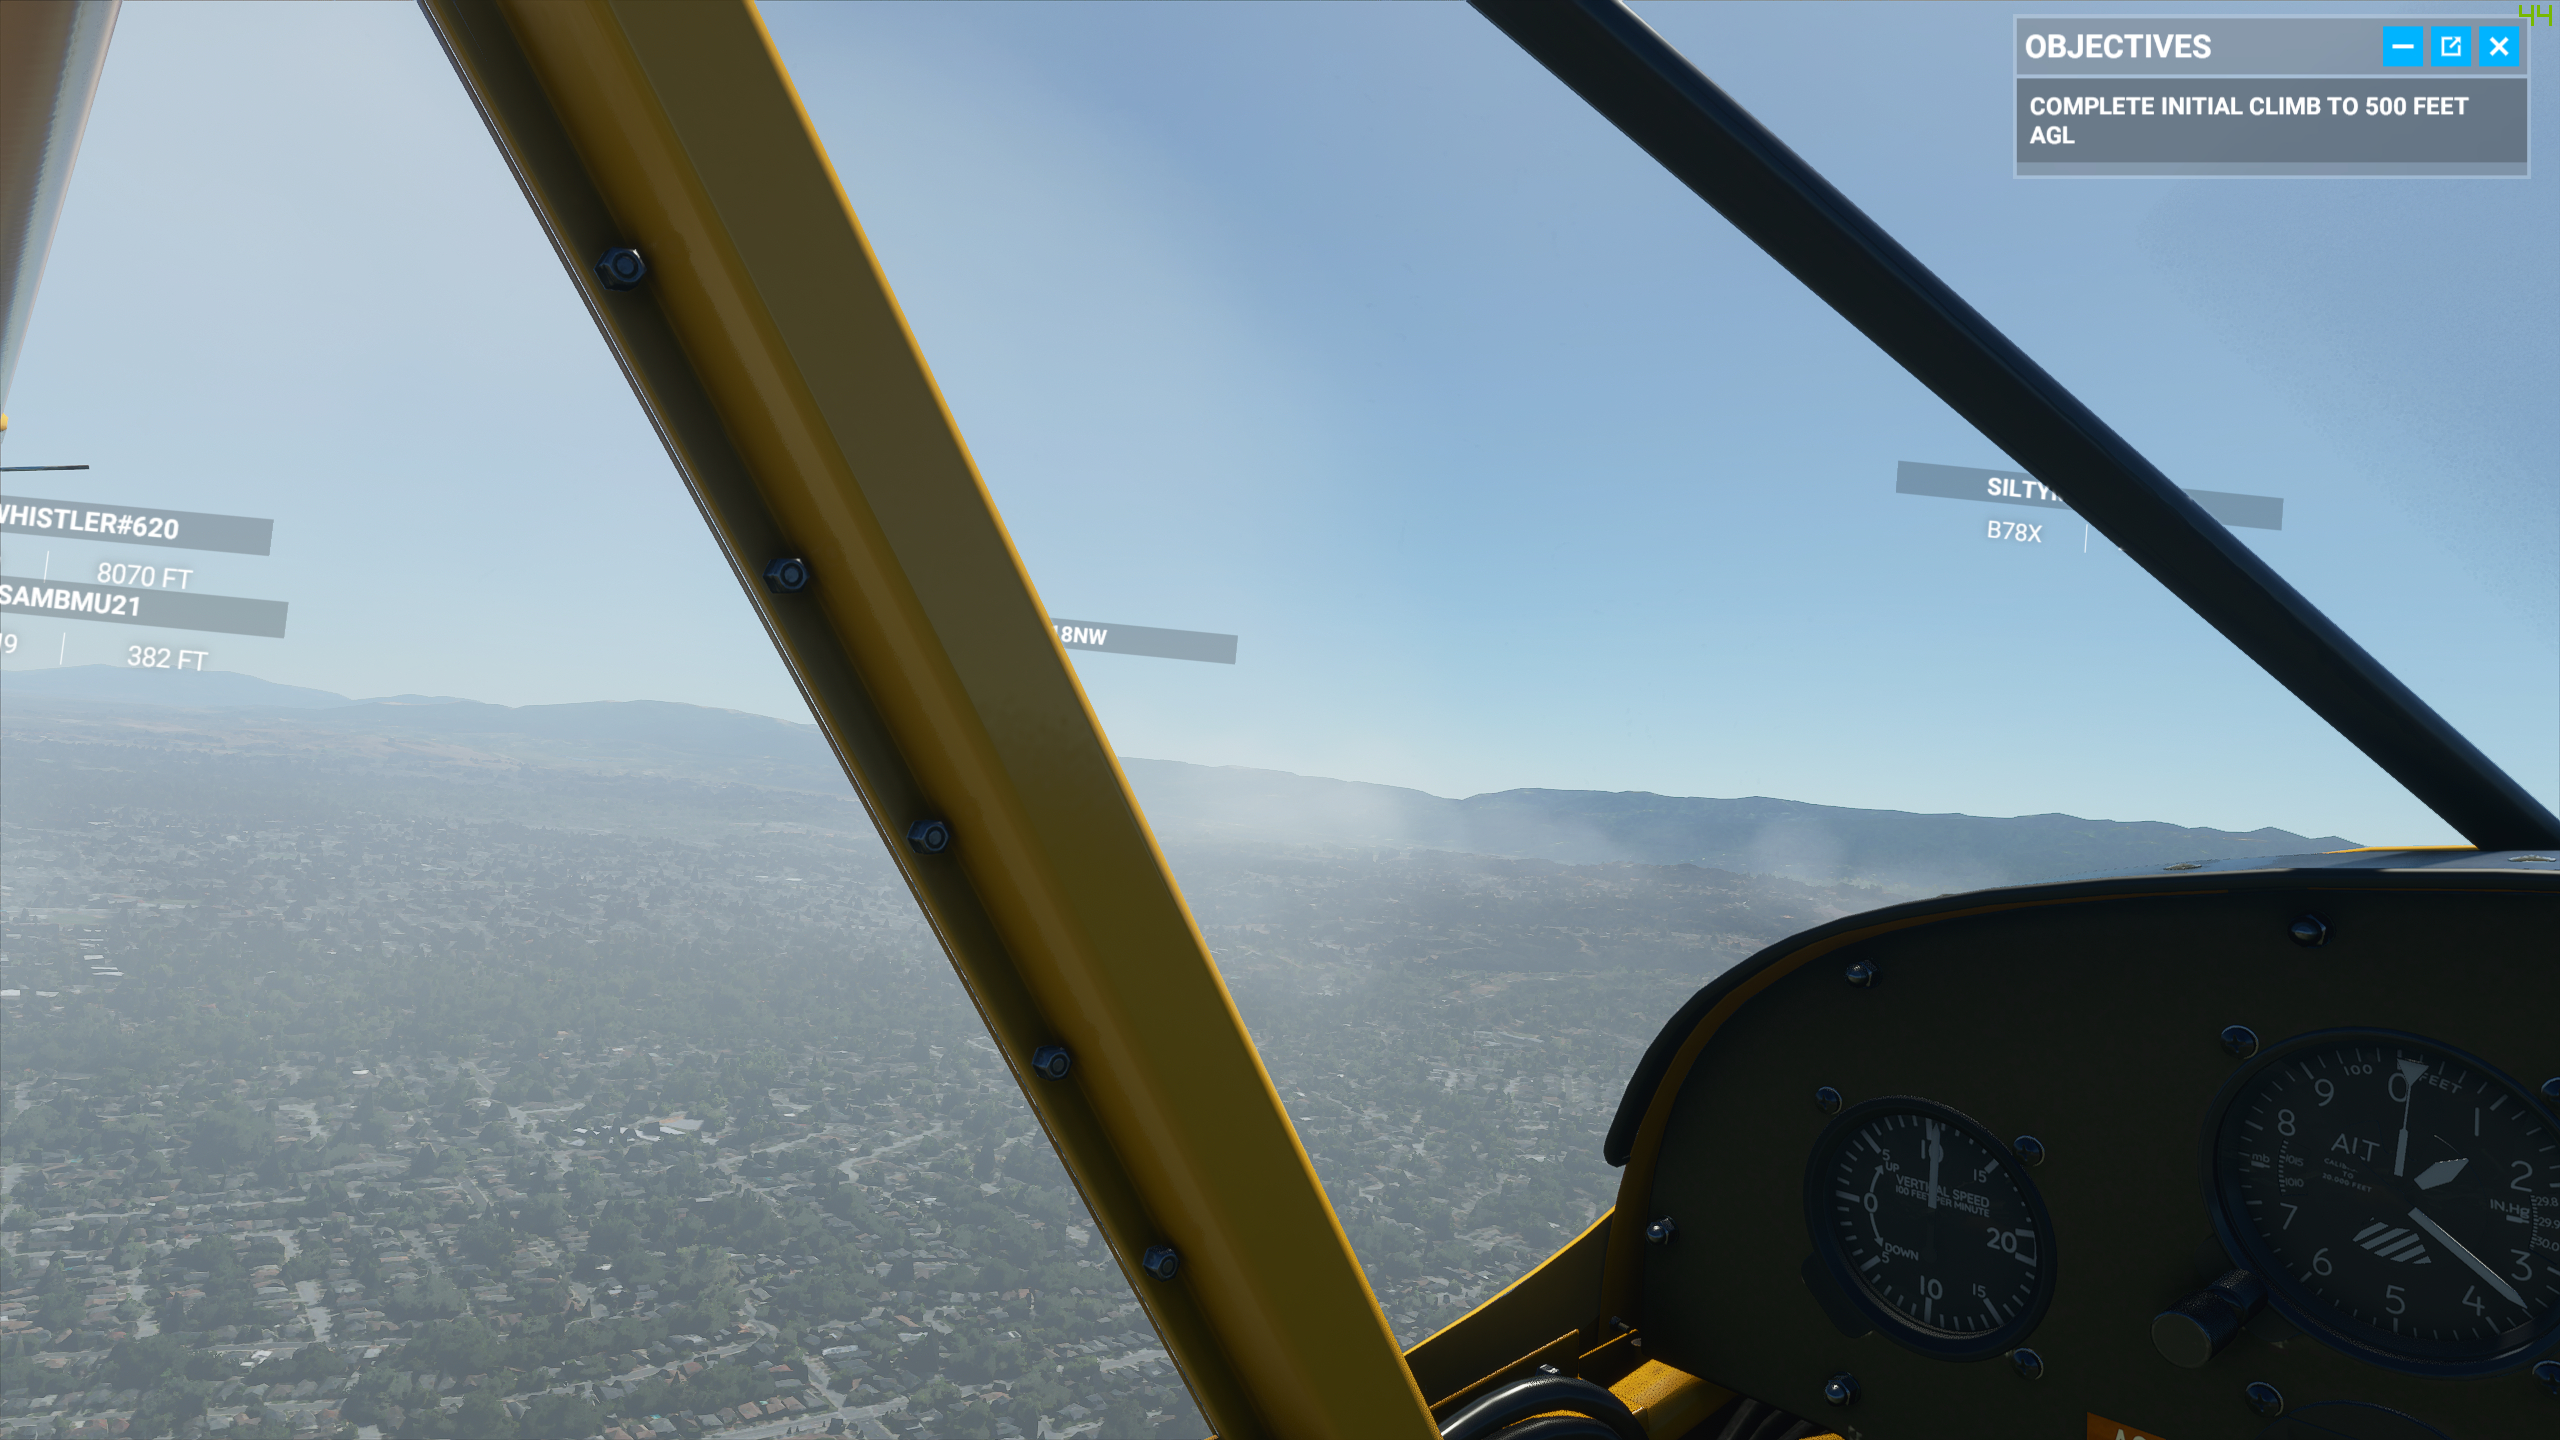 Microsoft Flight Simulator's World is Two Million Gigabytes in